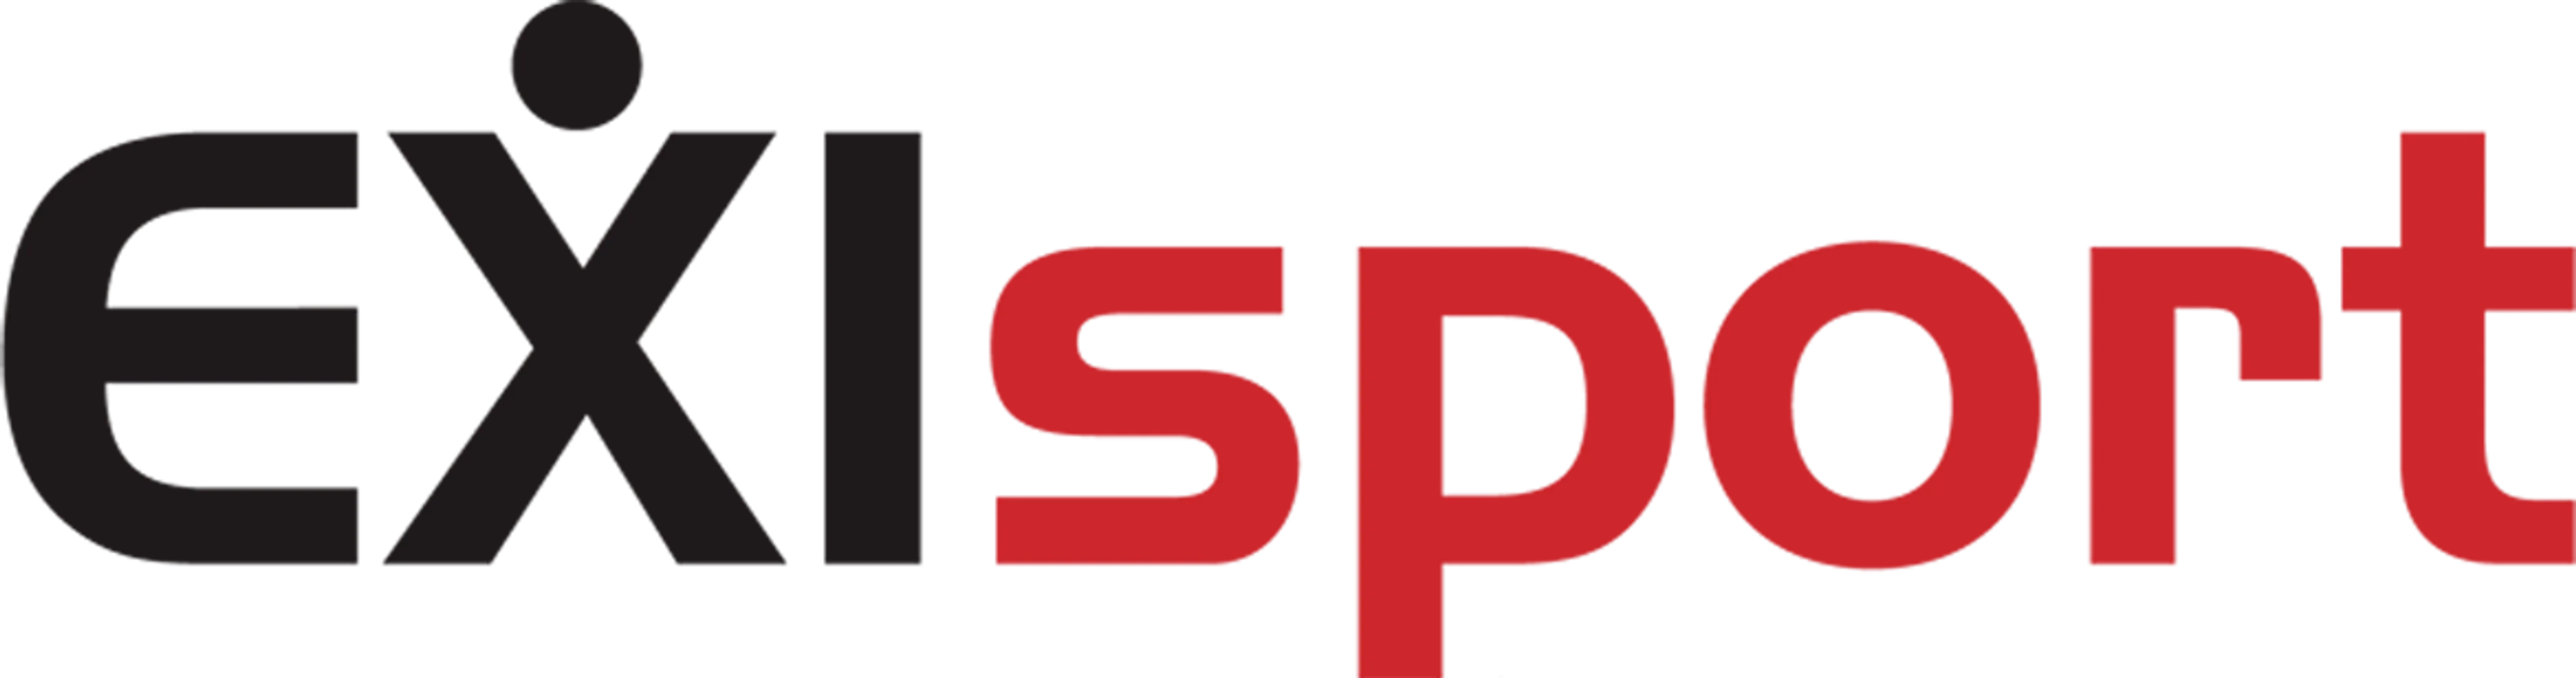 EXISPORT logo